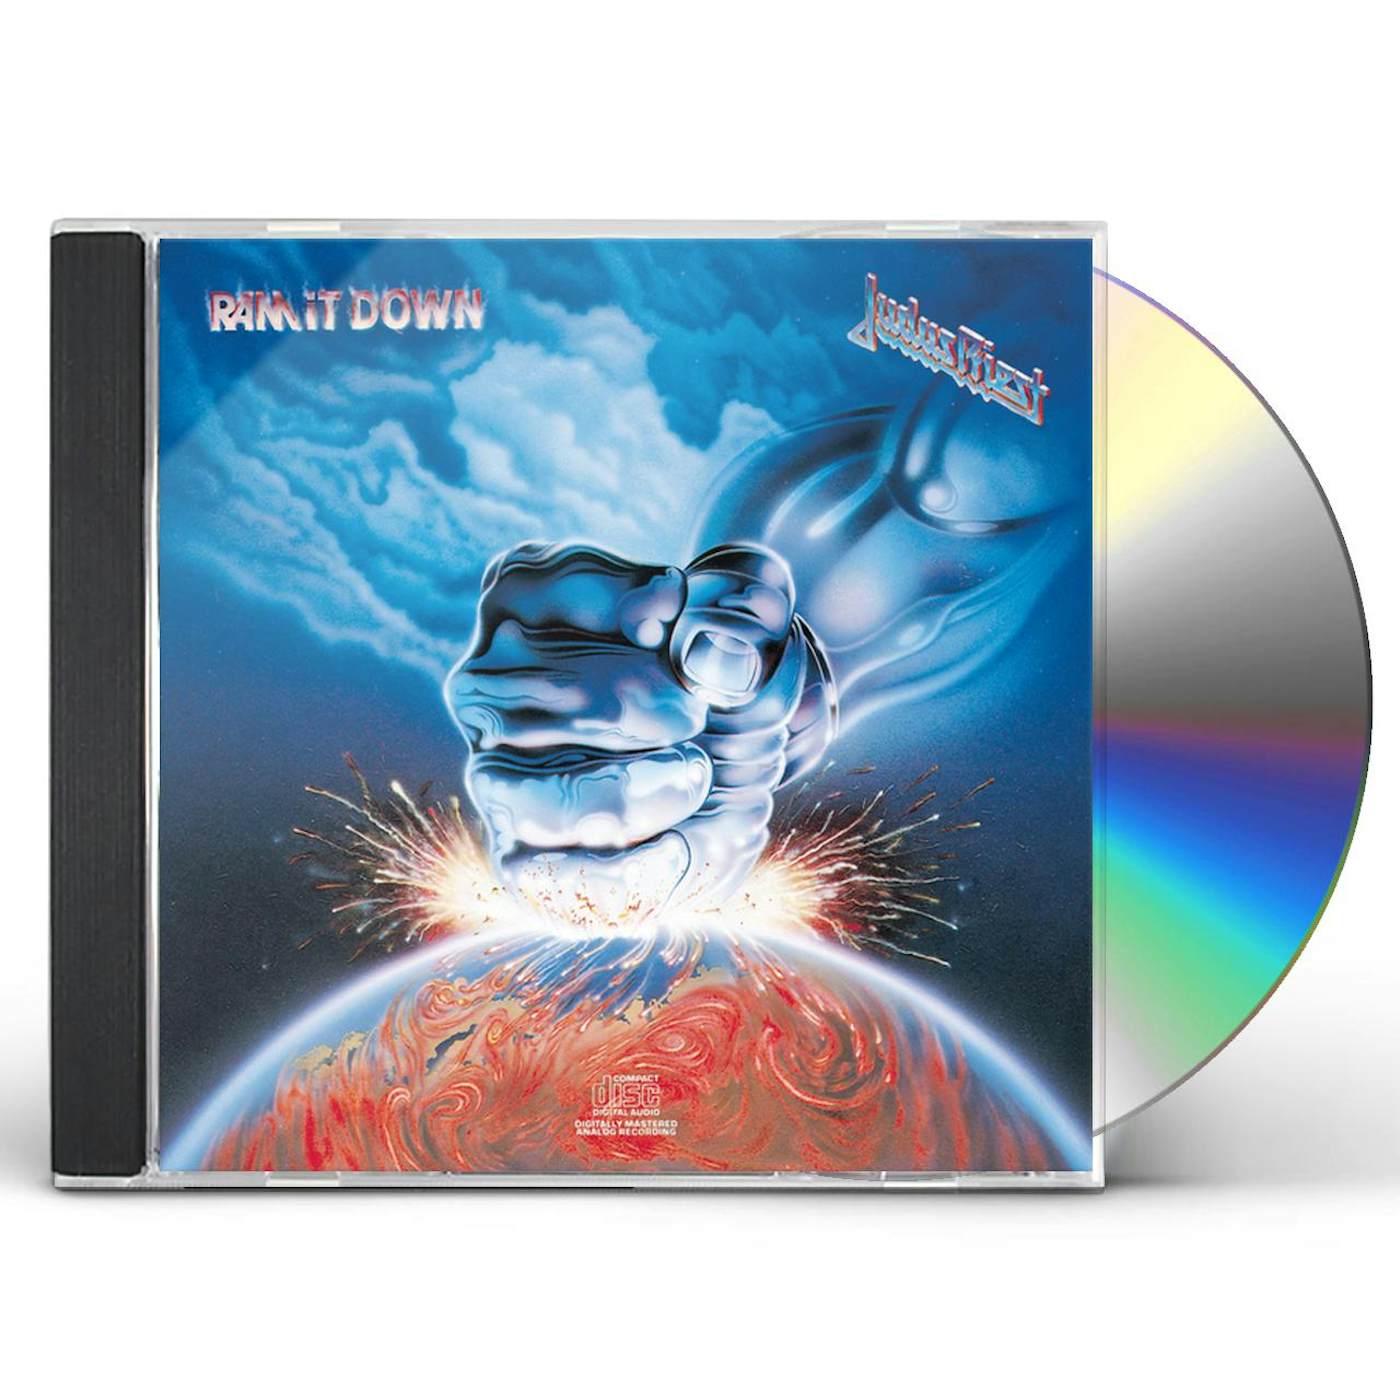 Judas Priest RAM IT DOWN CD